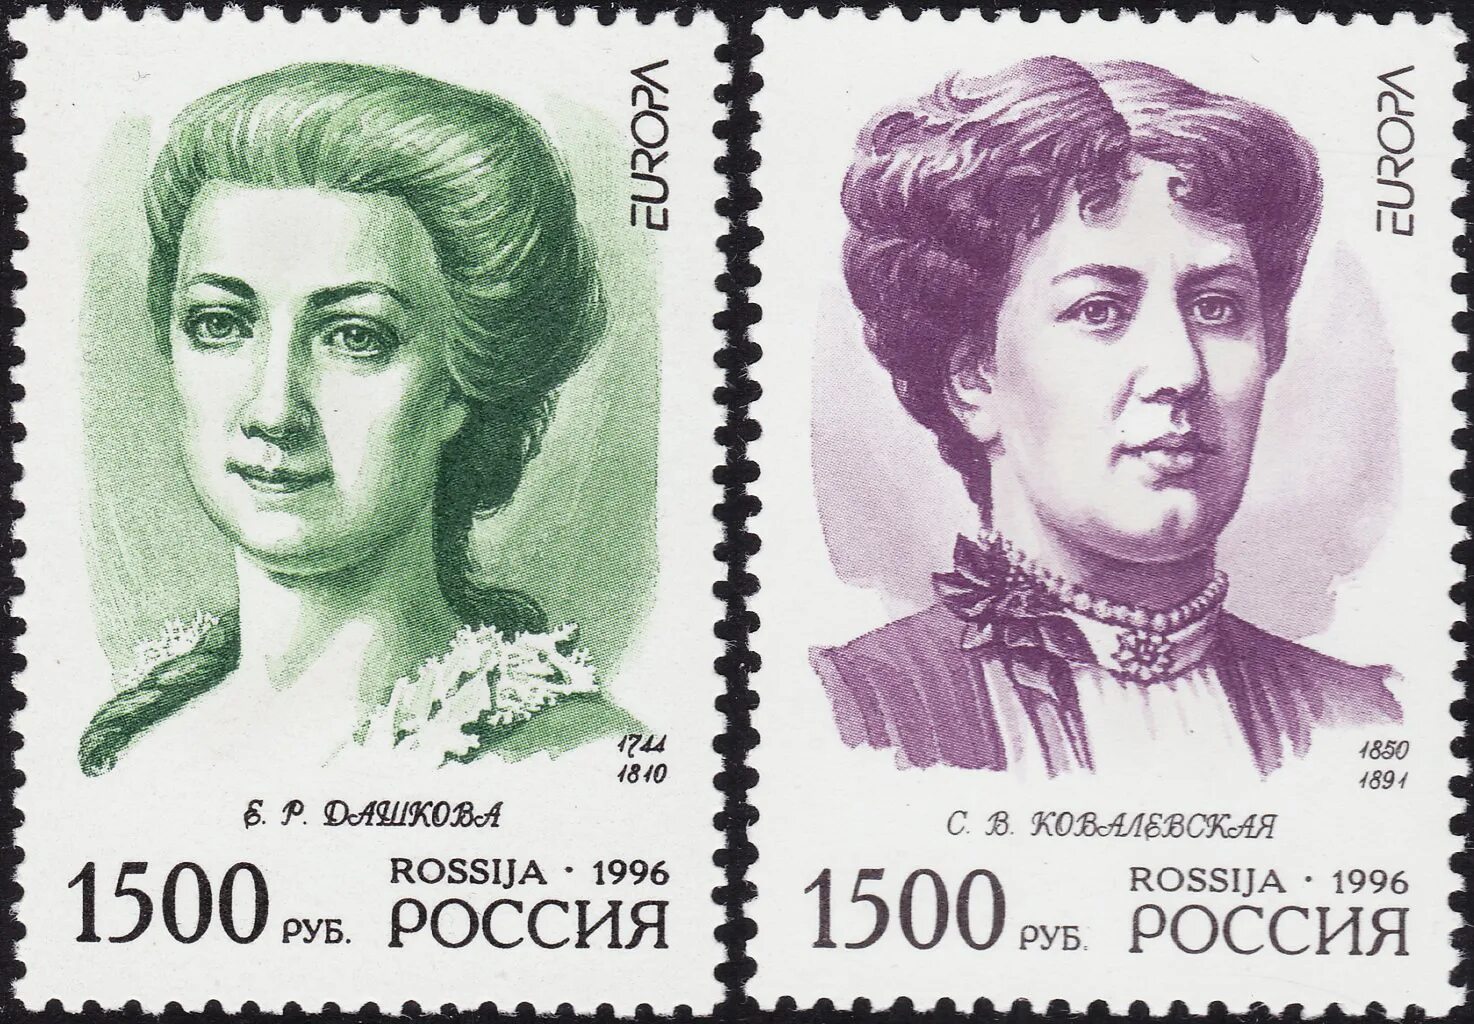 Марки 1996 года россия. Марки с портретами женщин. Почтовые марки с портретами. Россия 1996.